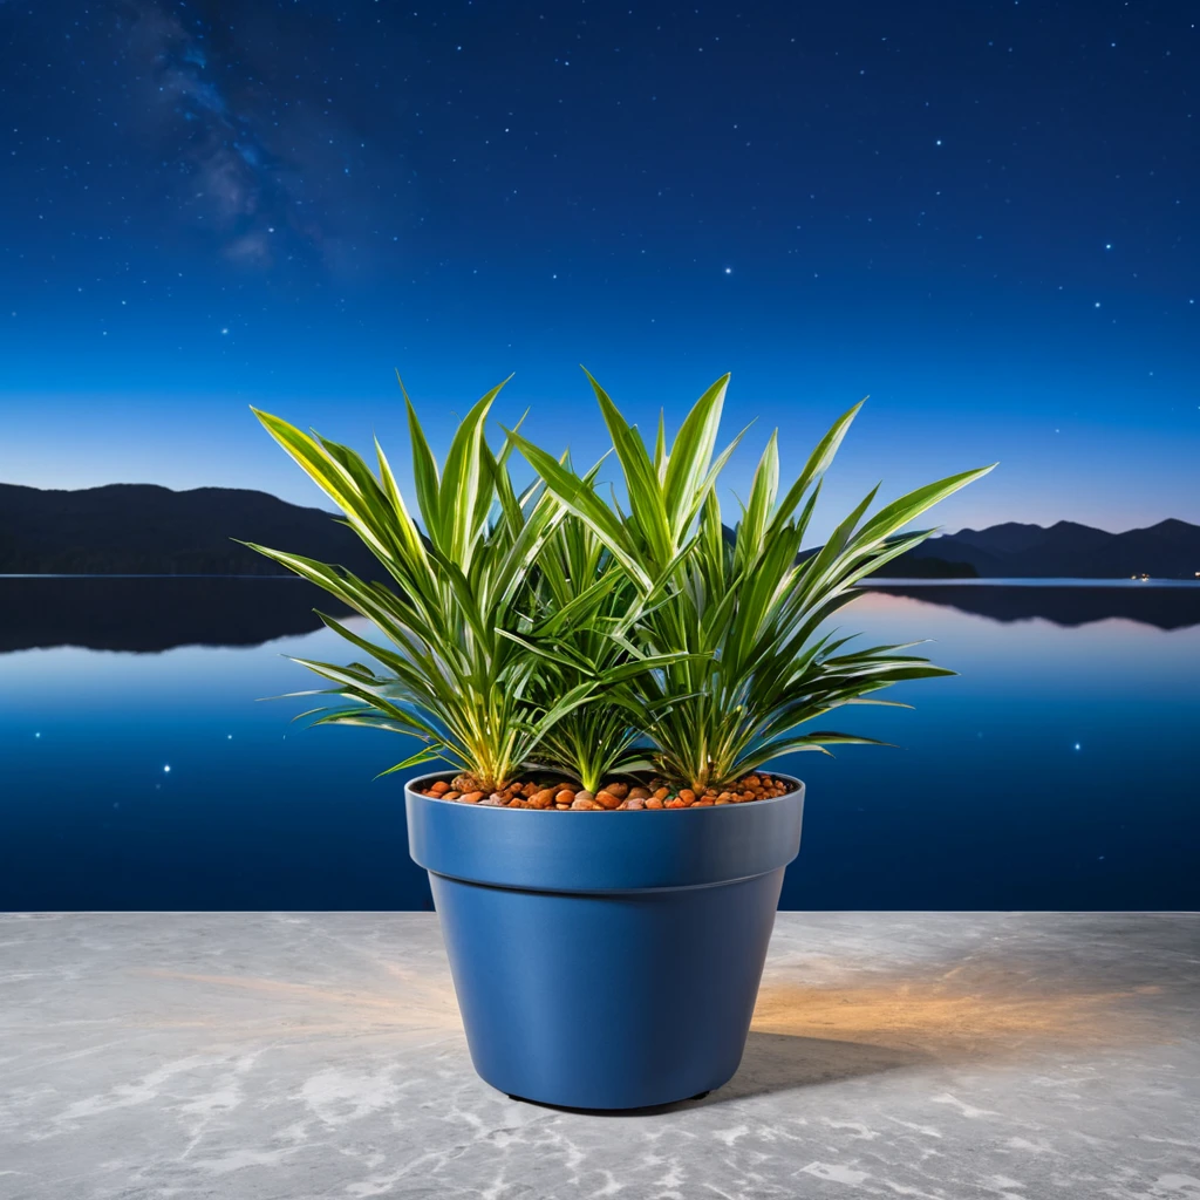 (plant pot showcase) <lora:27_plant_pot_showcase:1.1>
Blue background,
high quality, professional, highres, amazing, drama...